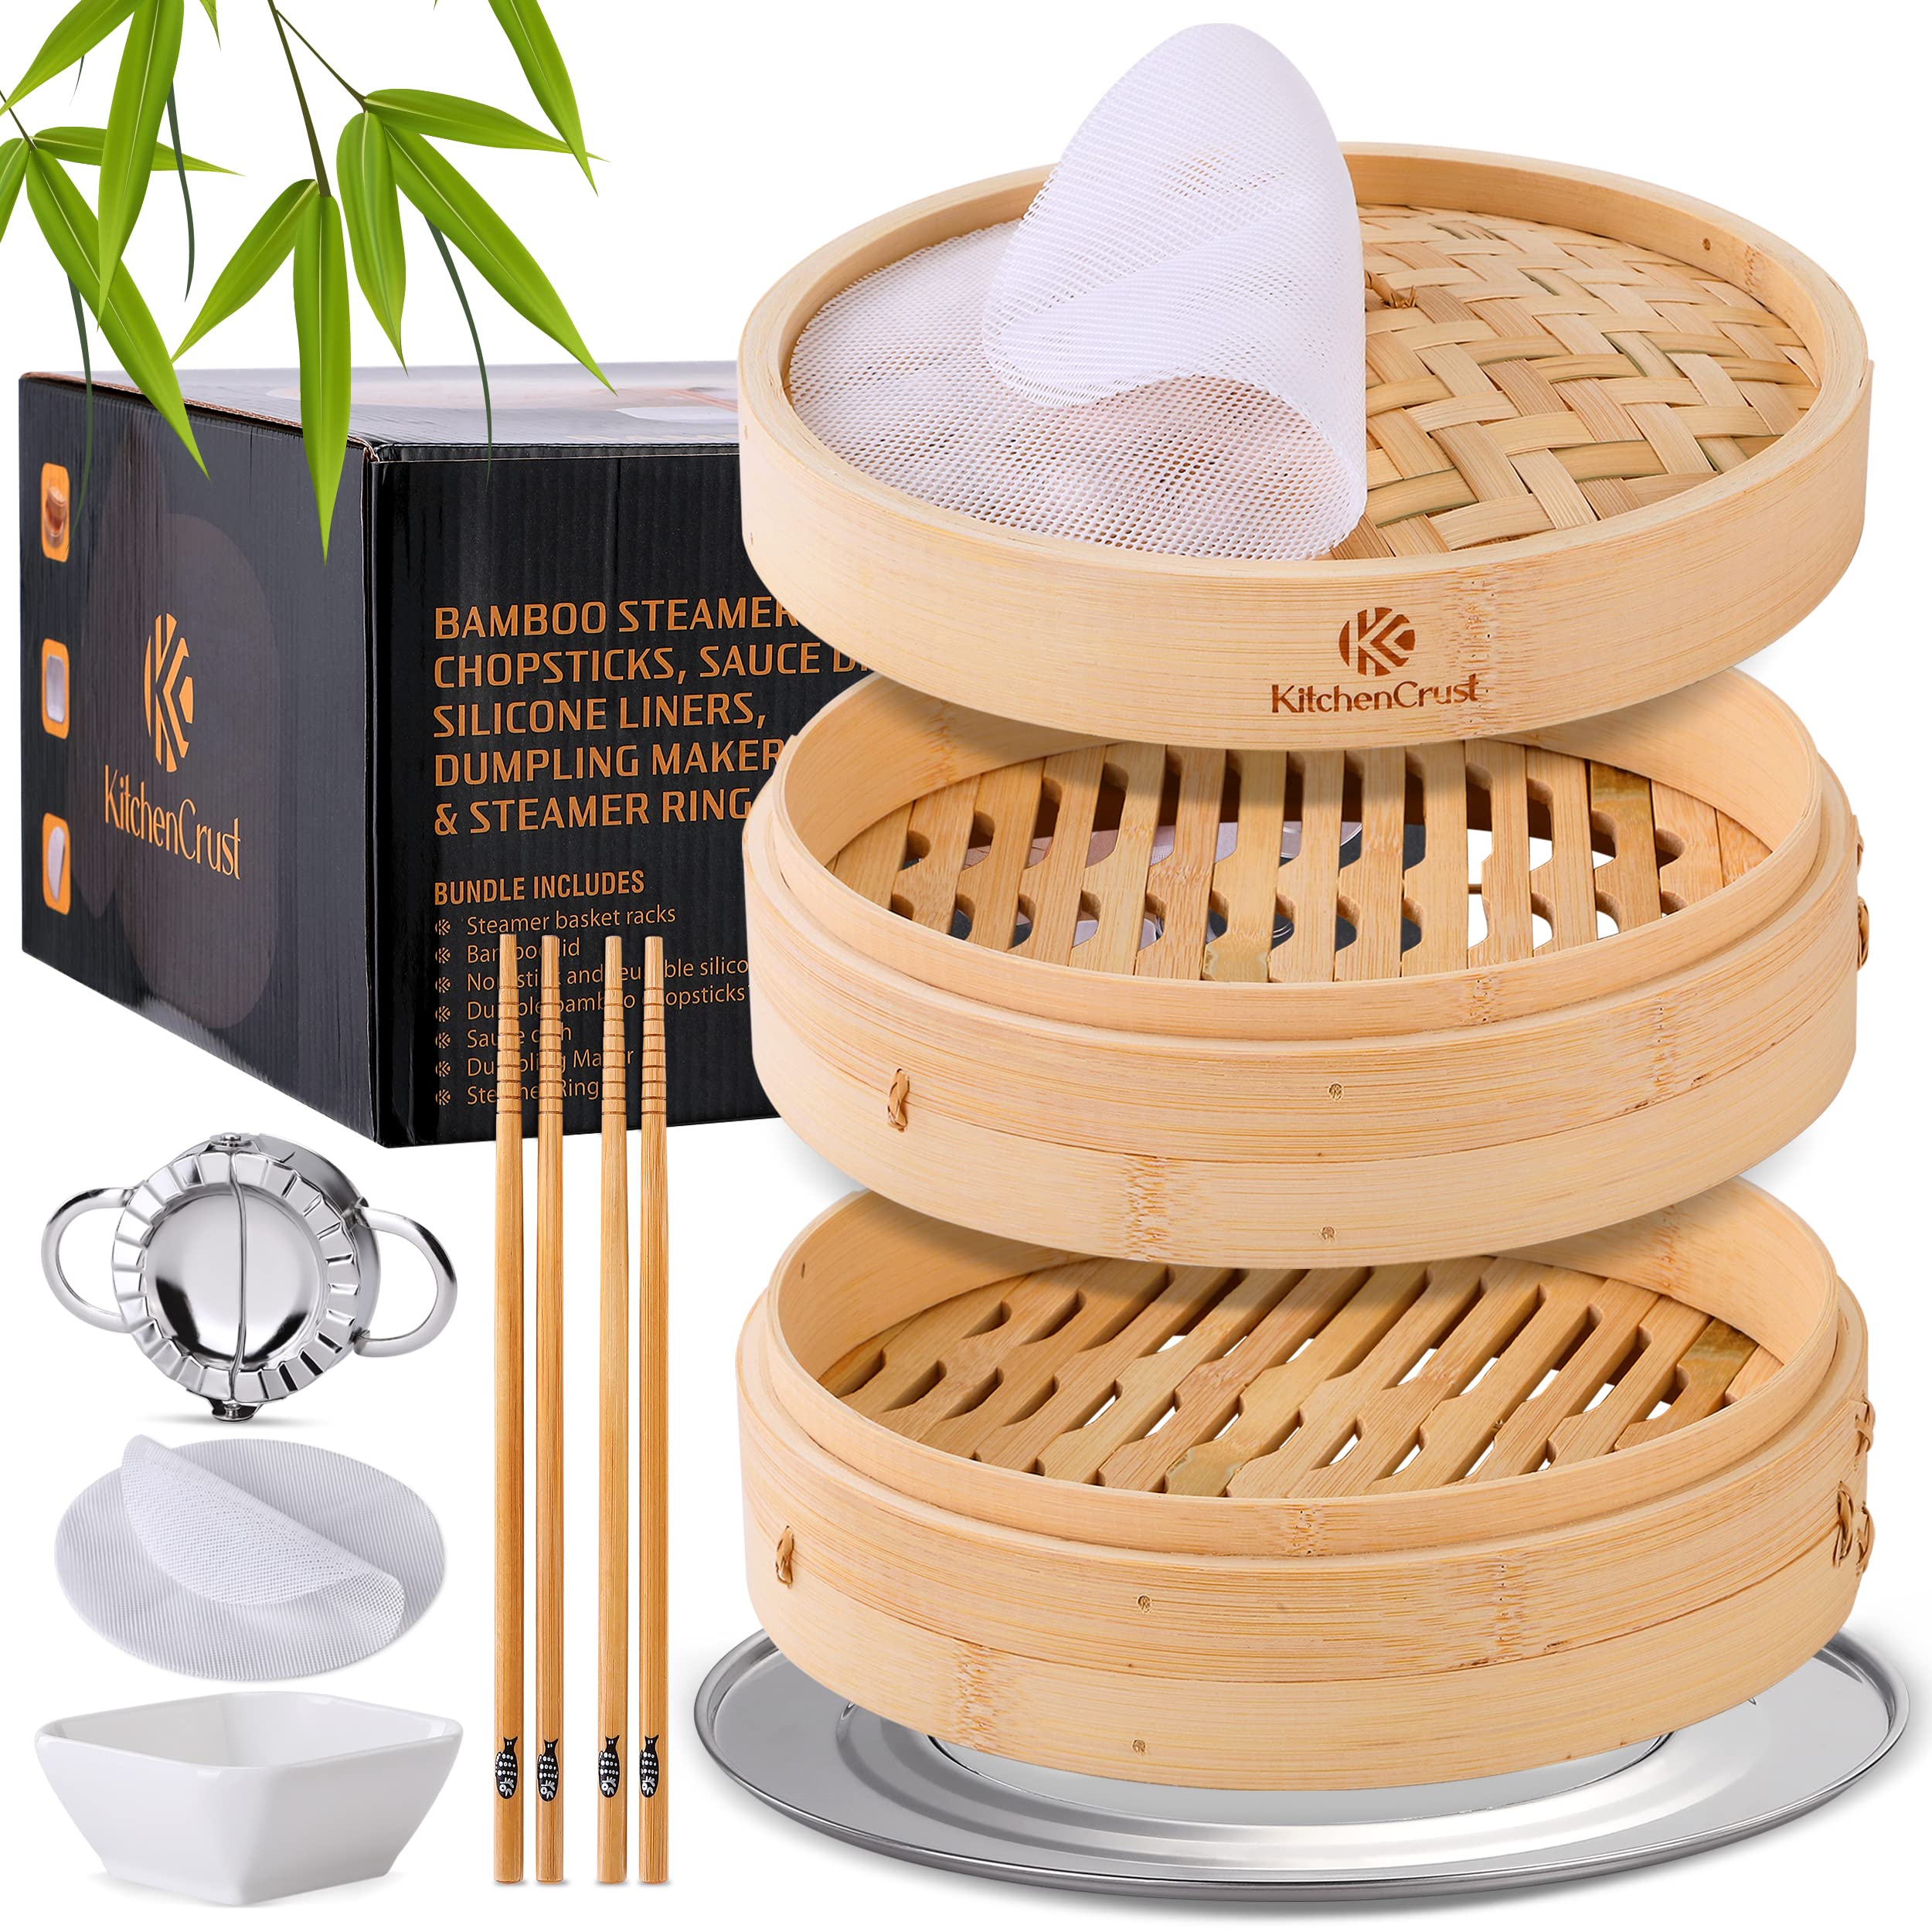 KitchenCrust Bamboo Steamer